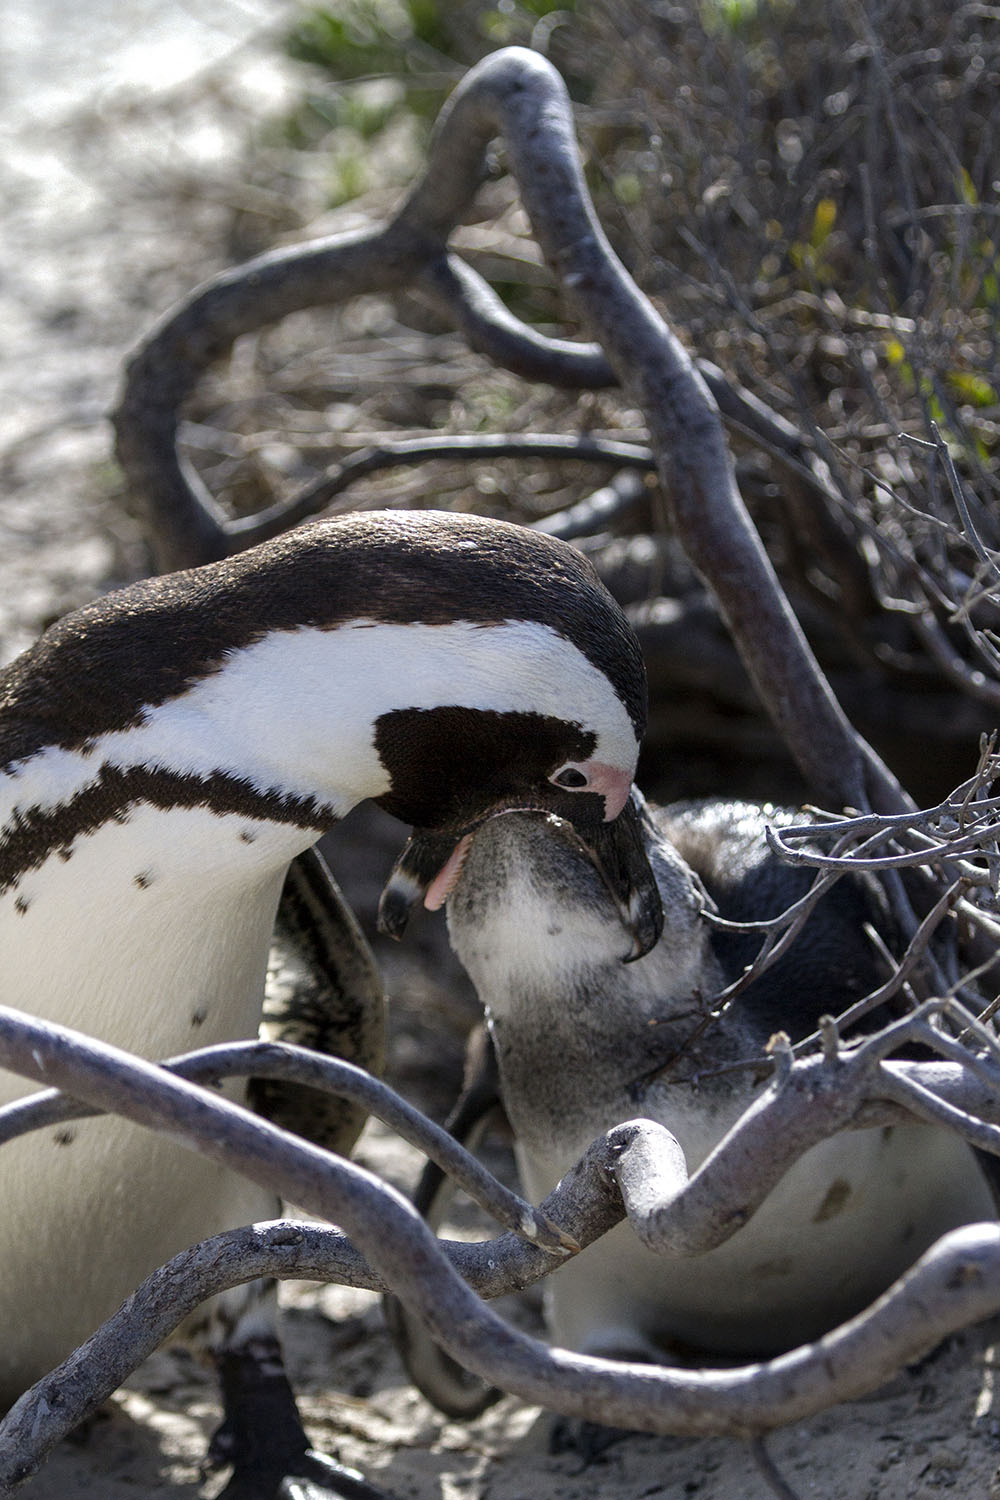 Penguin Colony Cape Town